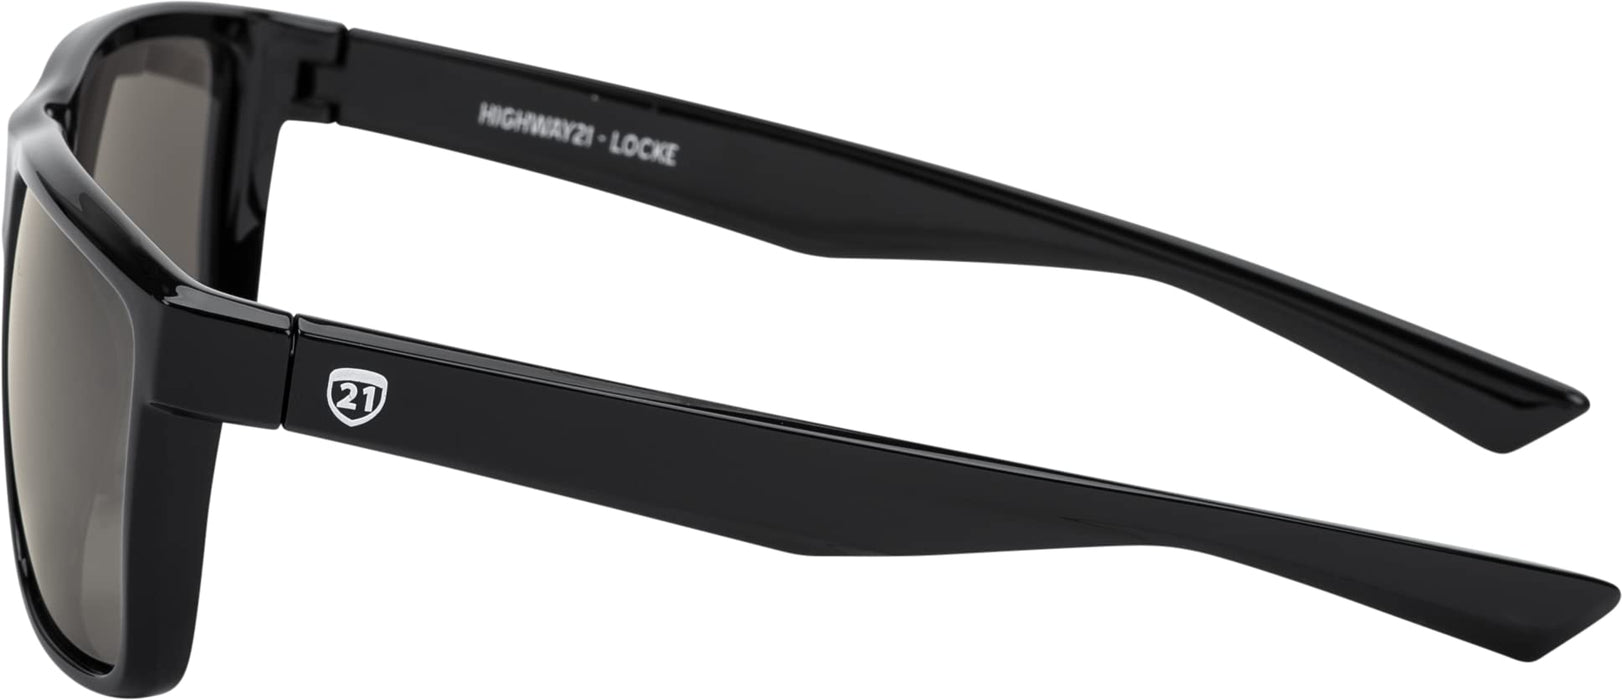 Highway 21 Locke Sunglasses Black Oleophobic Hydrophobic Coating 489-3030